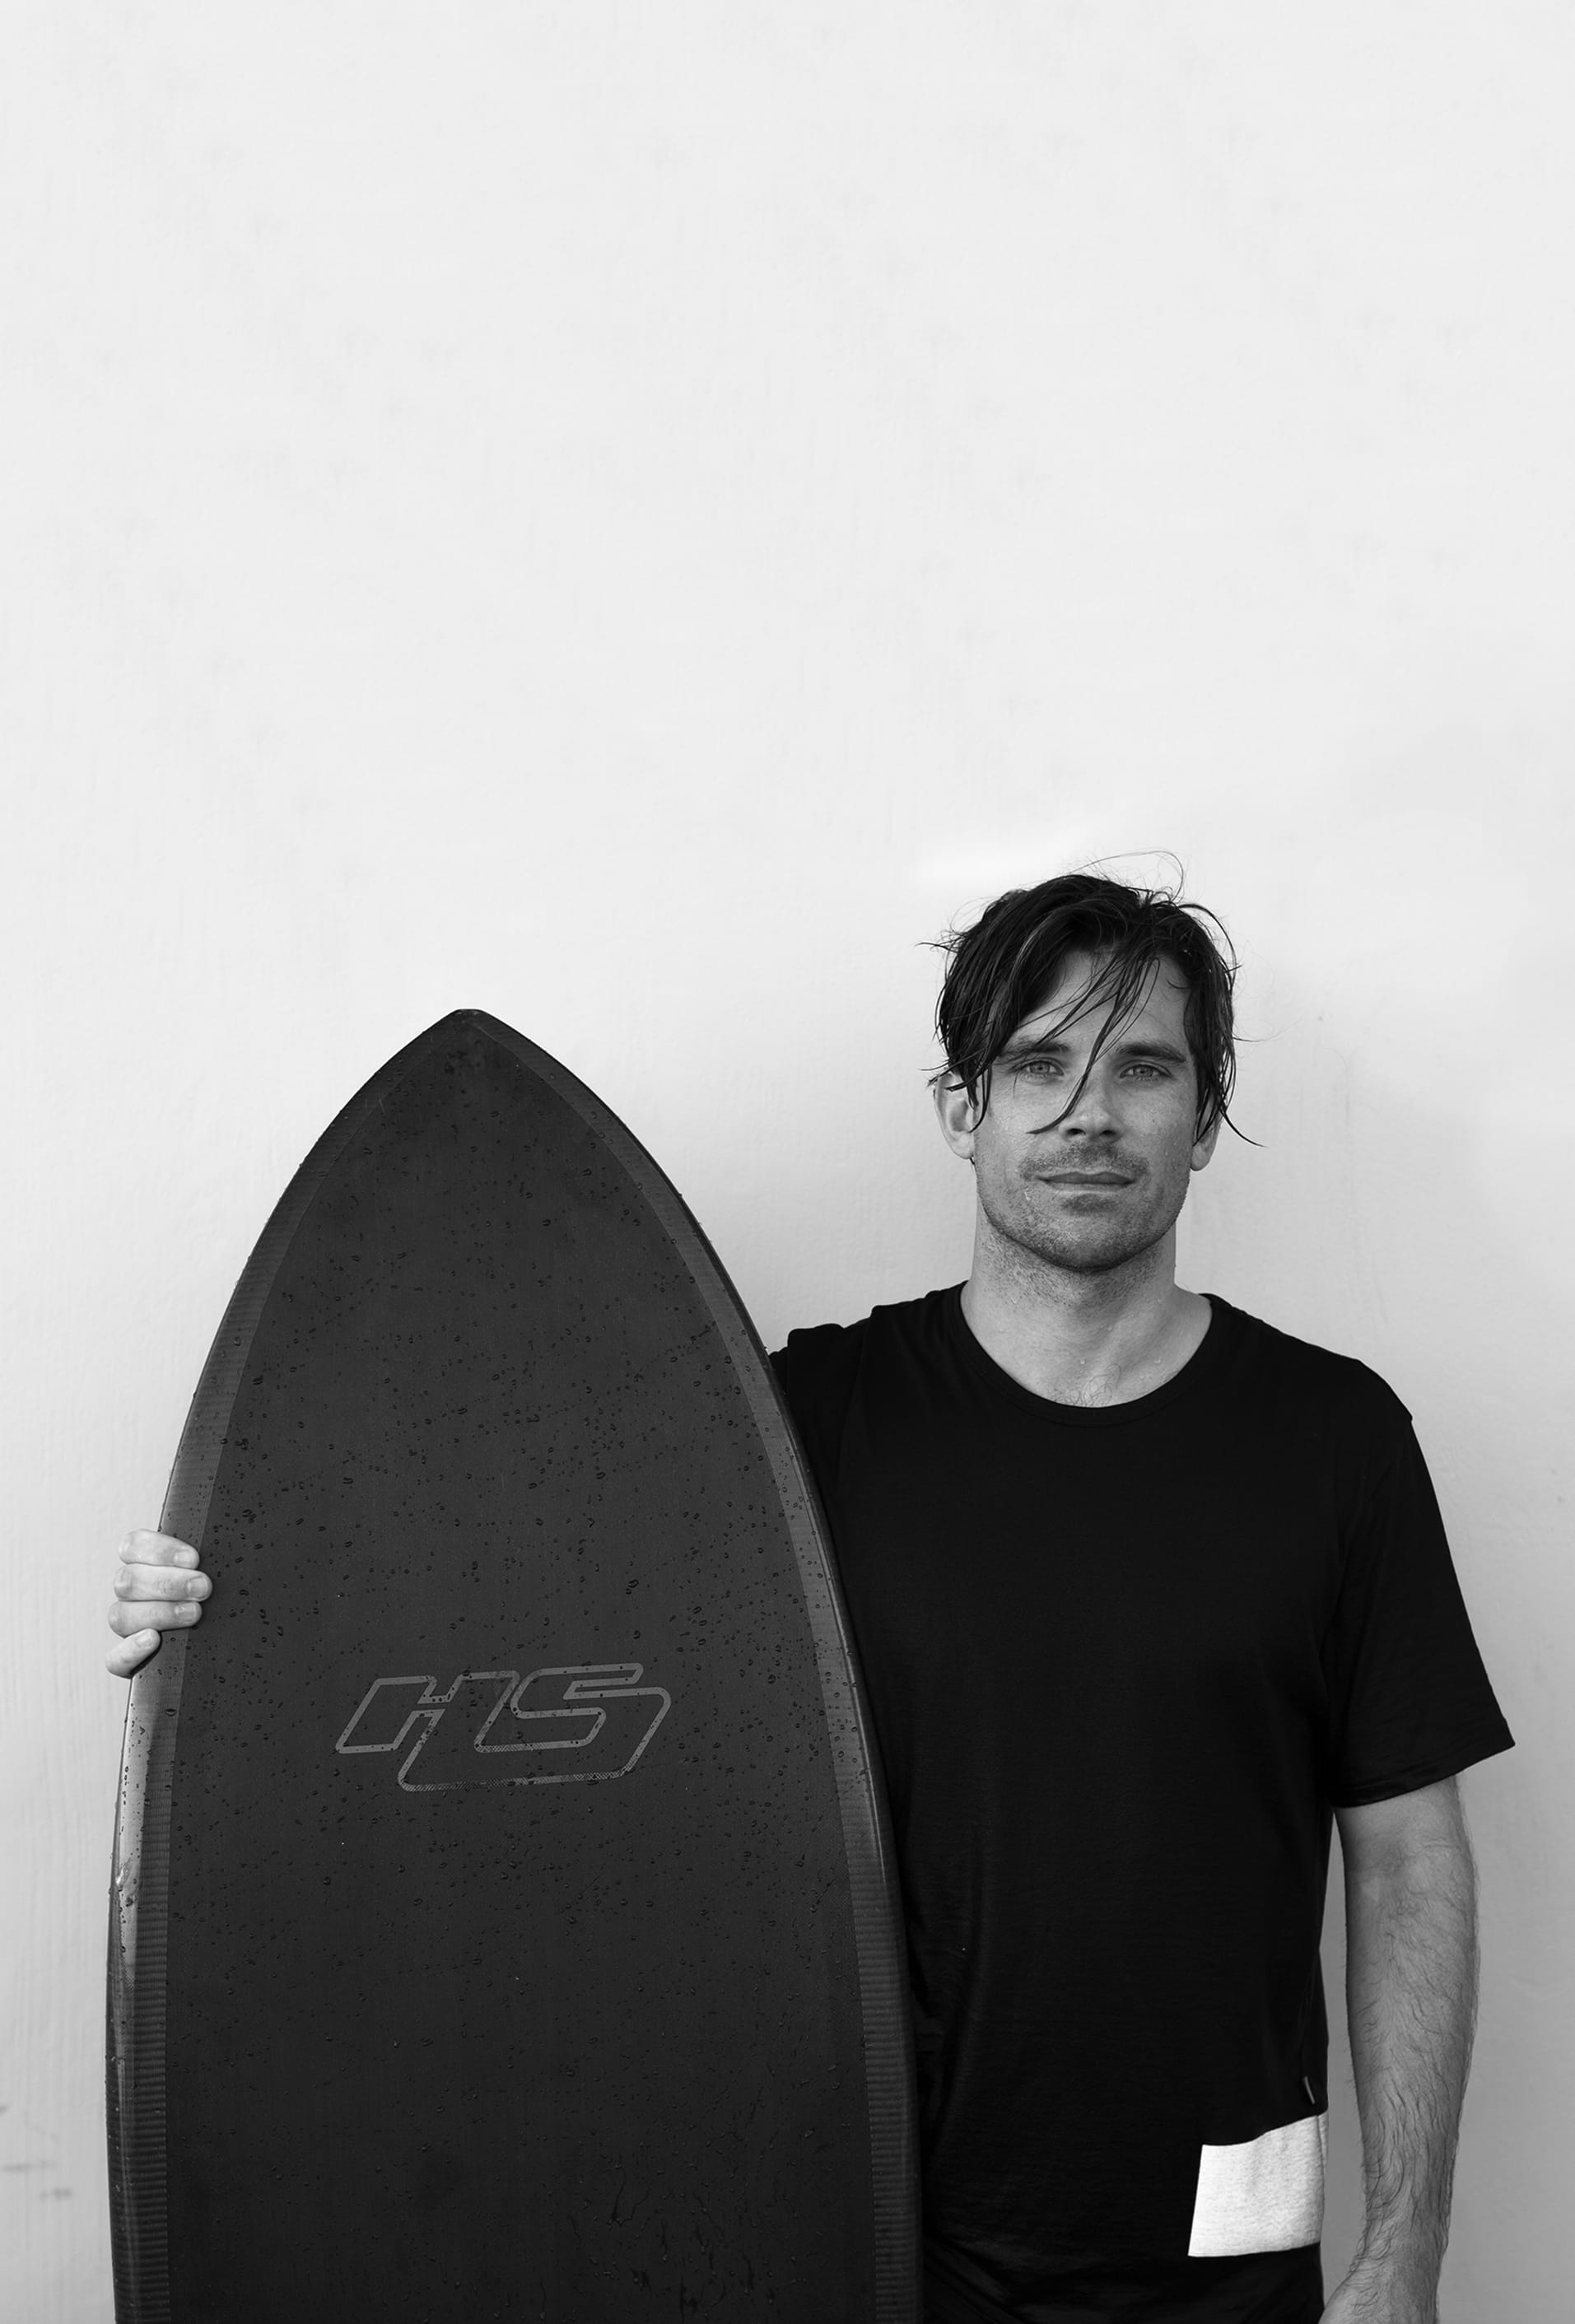 5 MINS WITH SURFBOARD DESIGNER HAYDEN COX